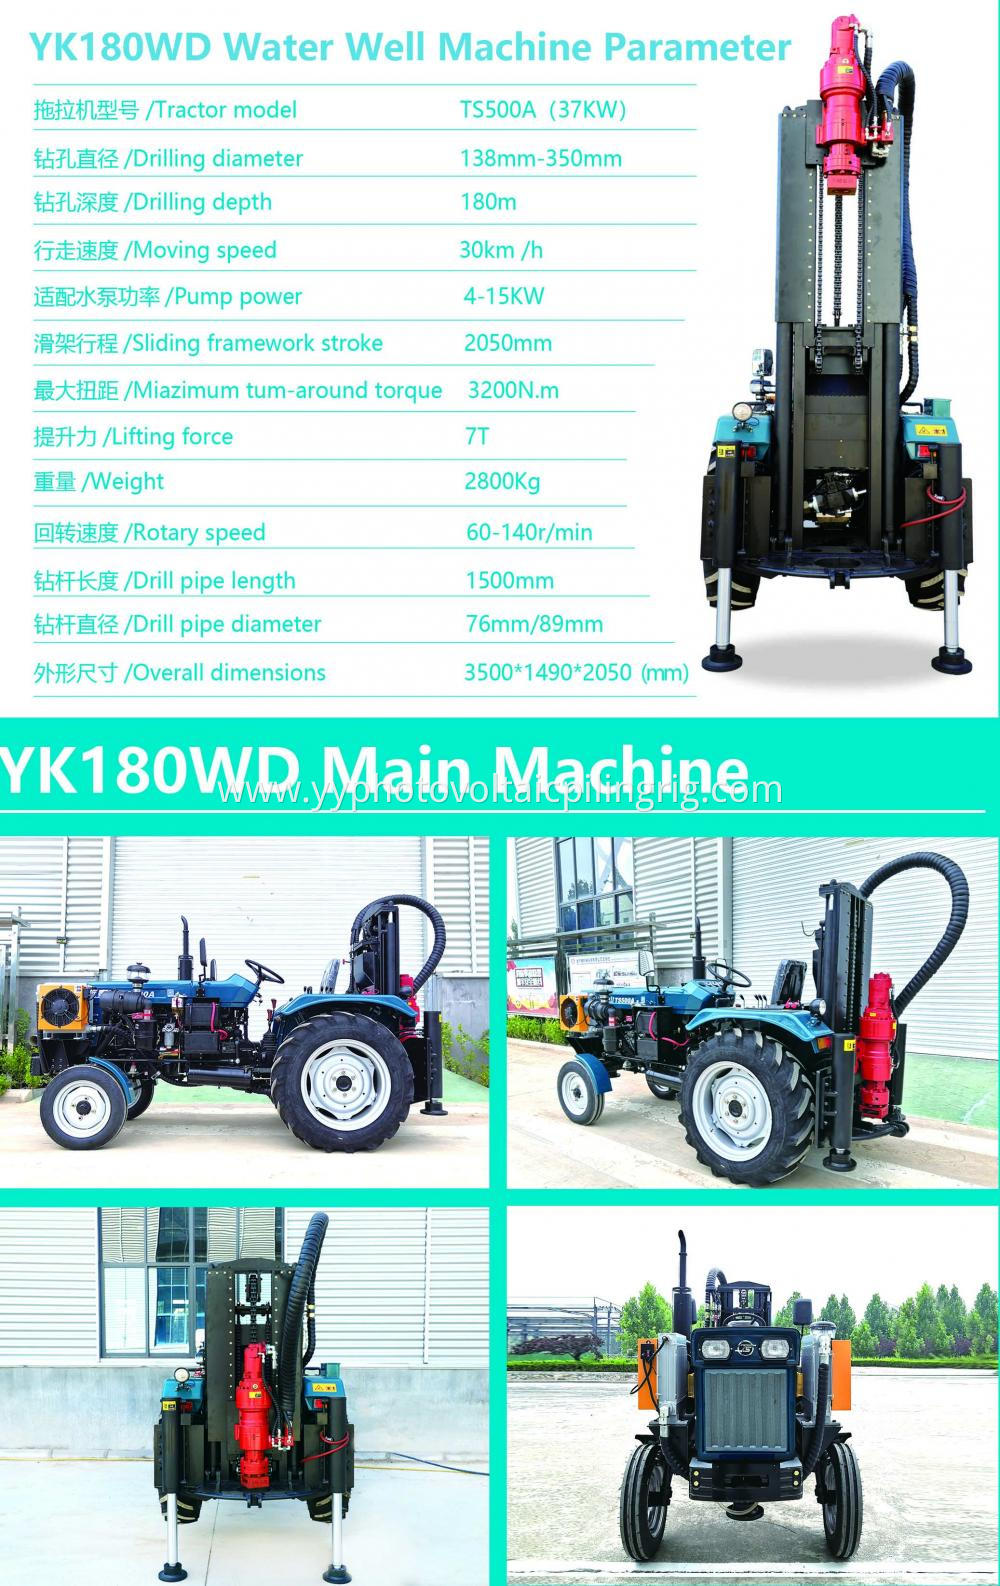 Yk180wd 150m 180m Tractor Water Well Drilling Machine Parameter Jpg